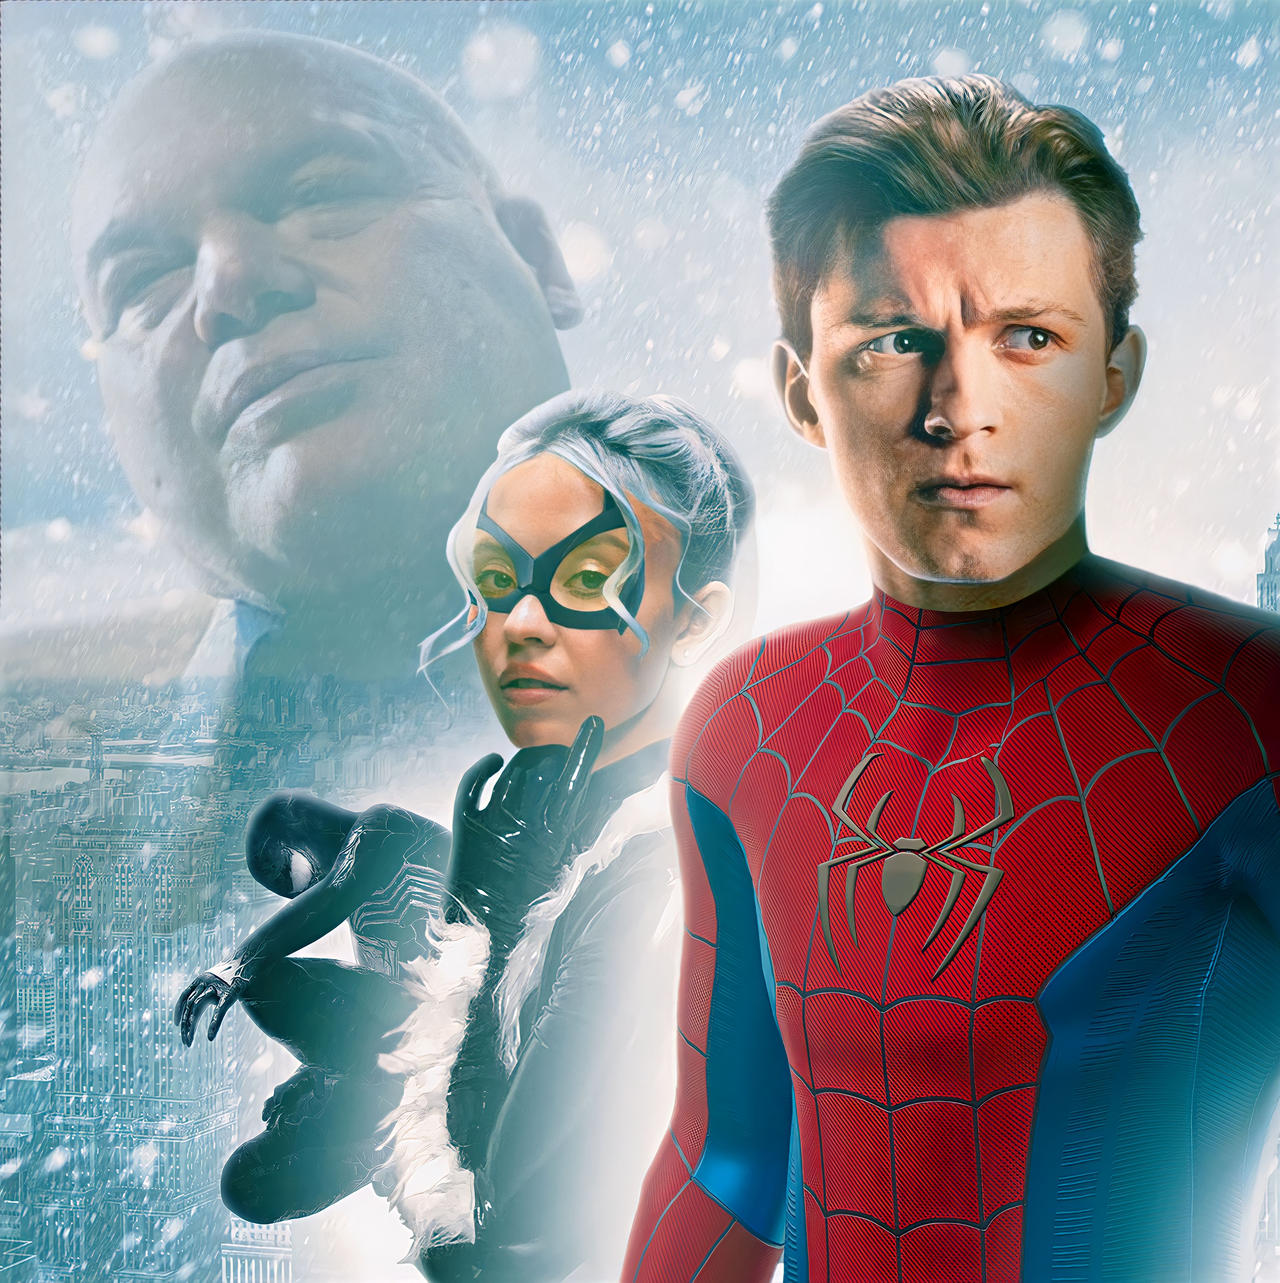 Marvel SpiderMan 4 MCU Tom Holland Fan Poster by JoeMama424 on DeviantArt